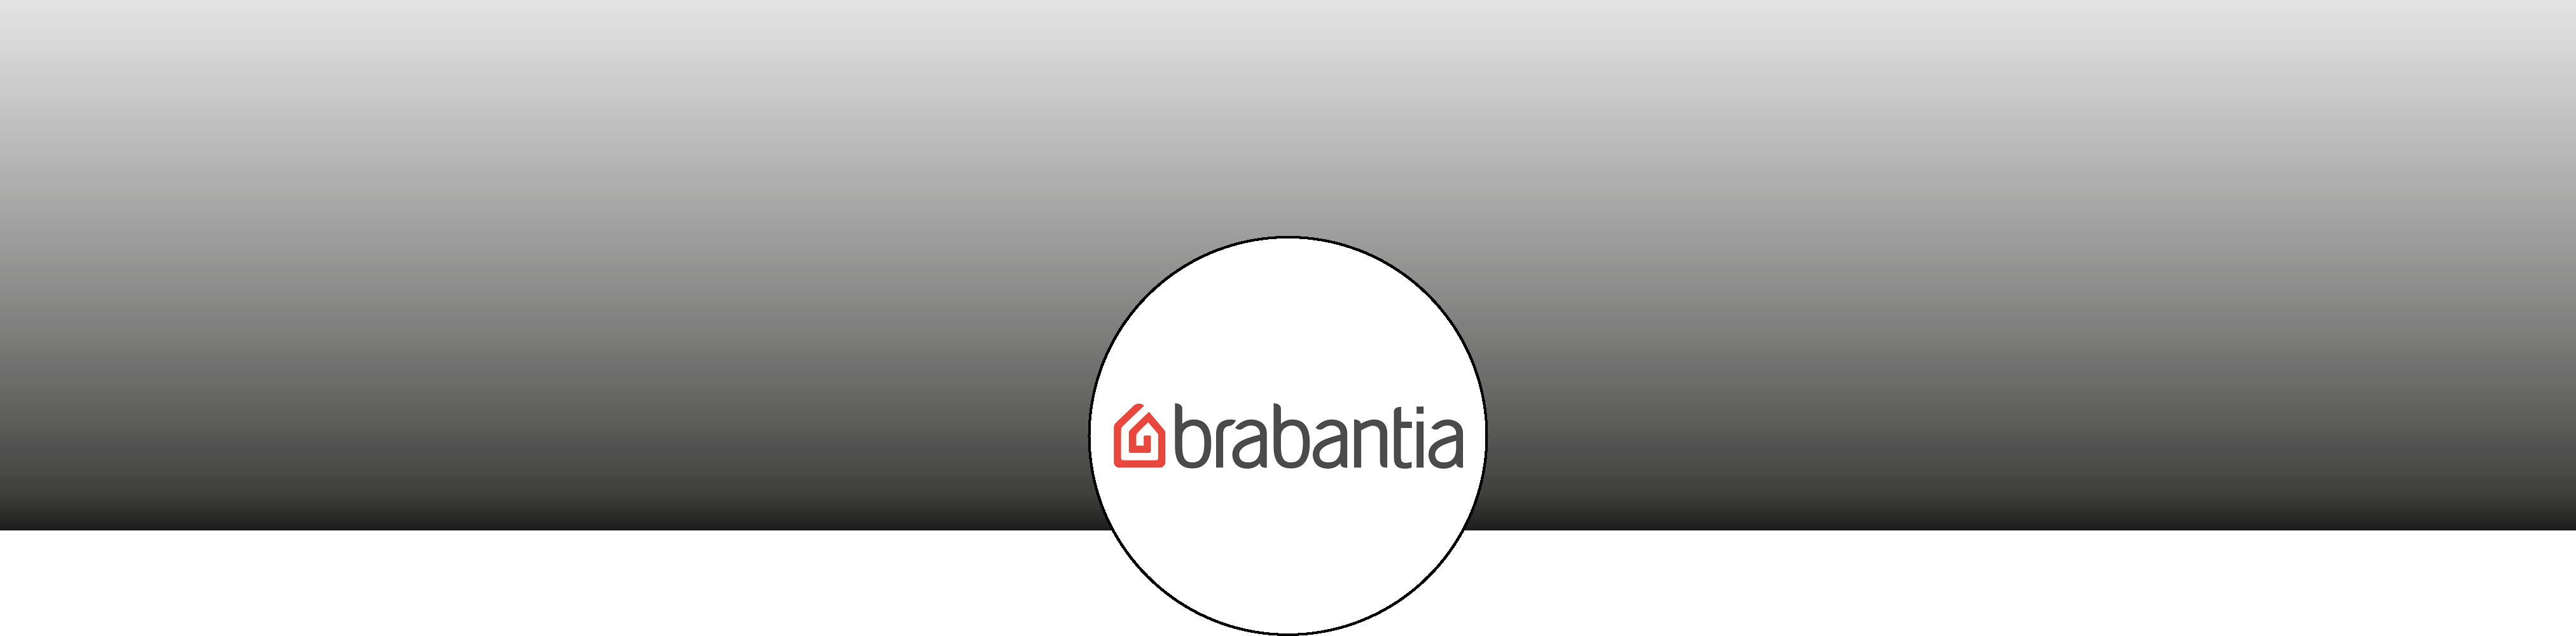 banner_brabantia